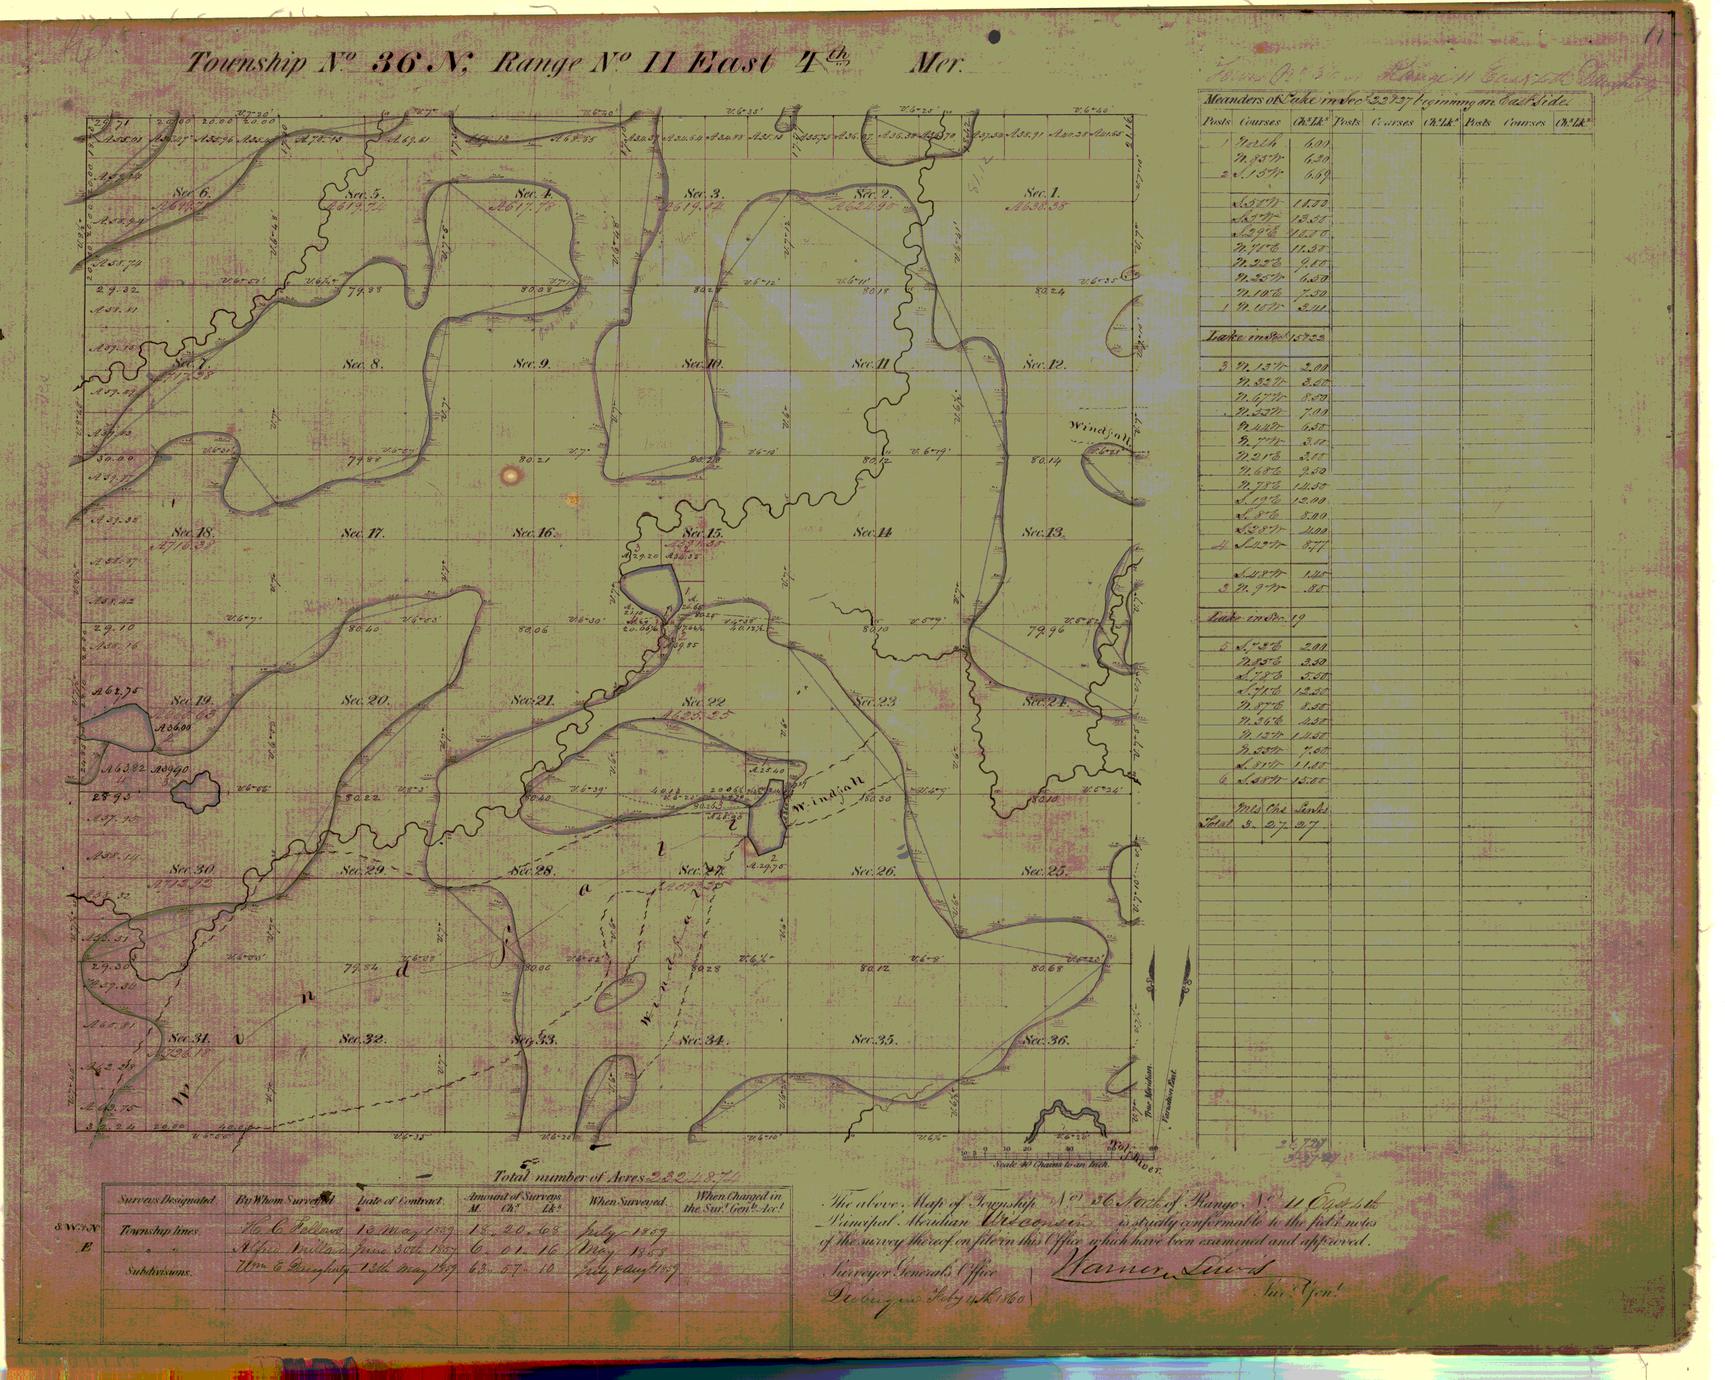 [Public Land Survey System map: Wisconsin Township 36 North, Range 11 East]